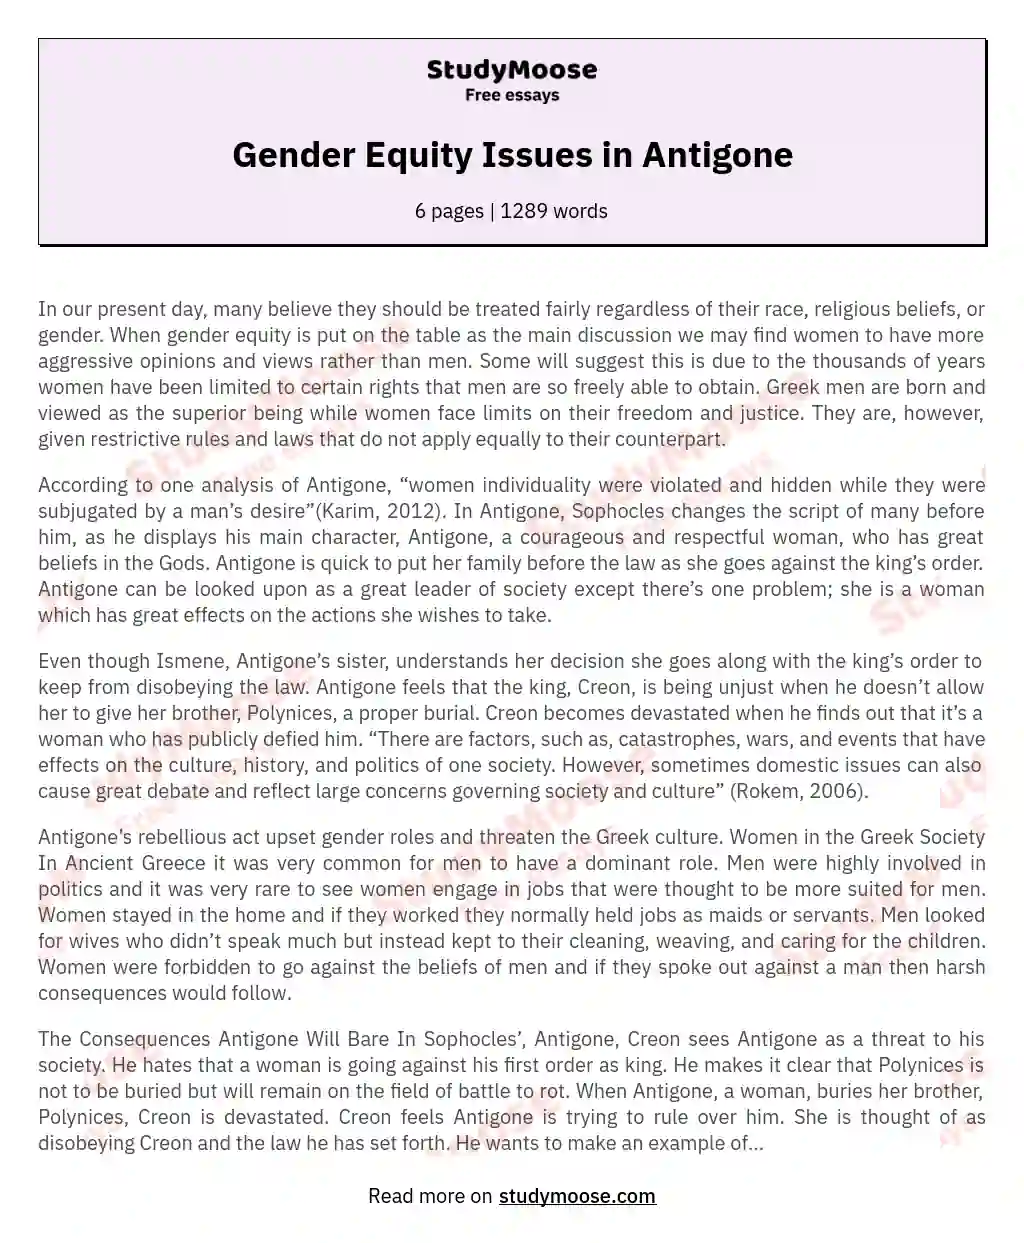 Gender Equity Issues in Antigone